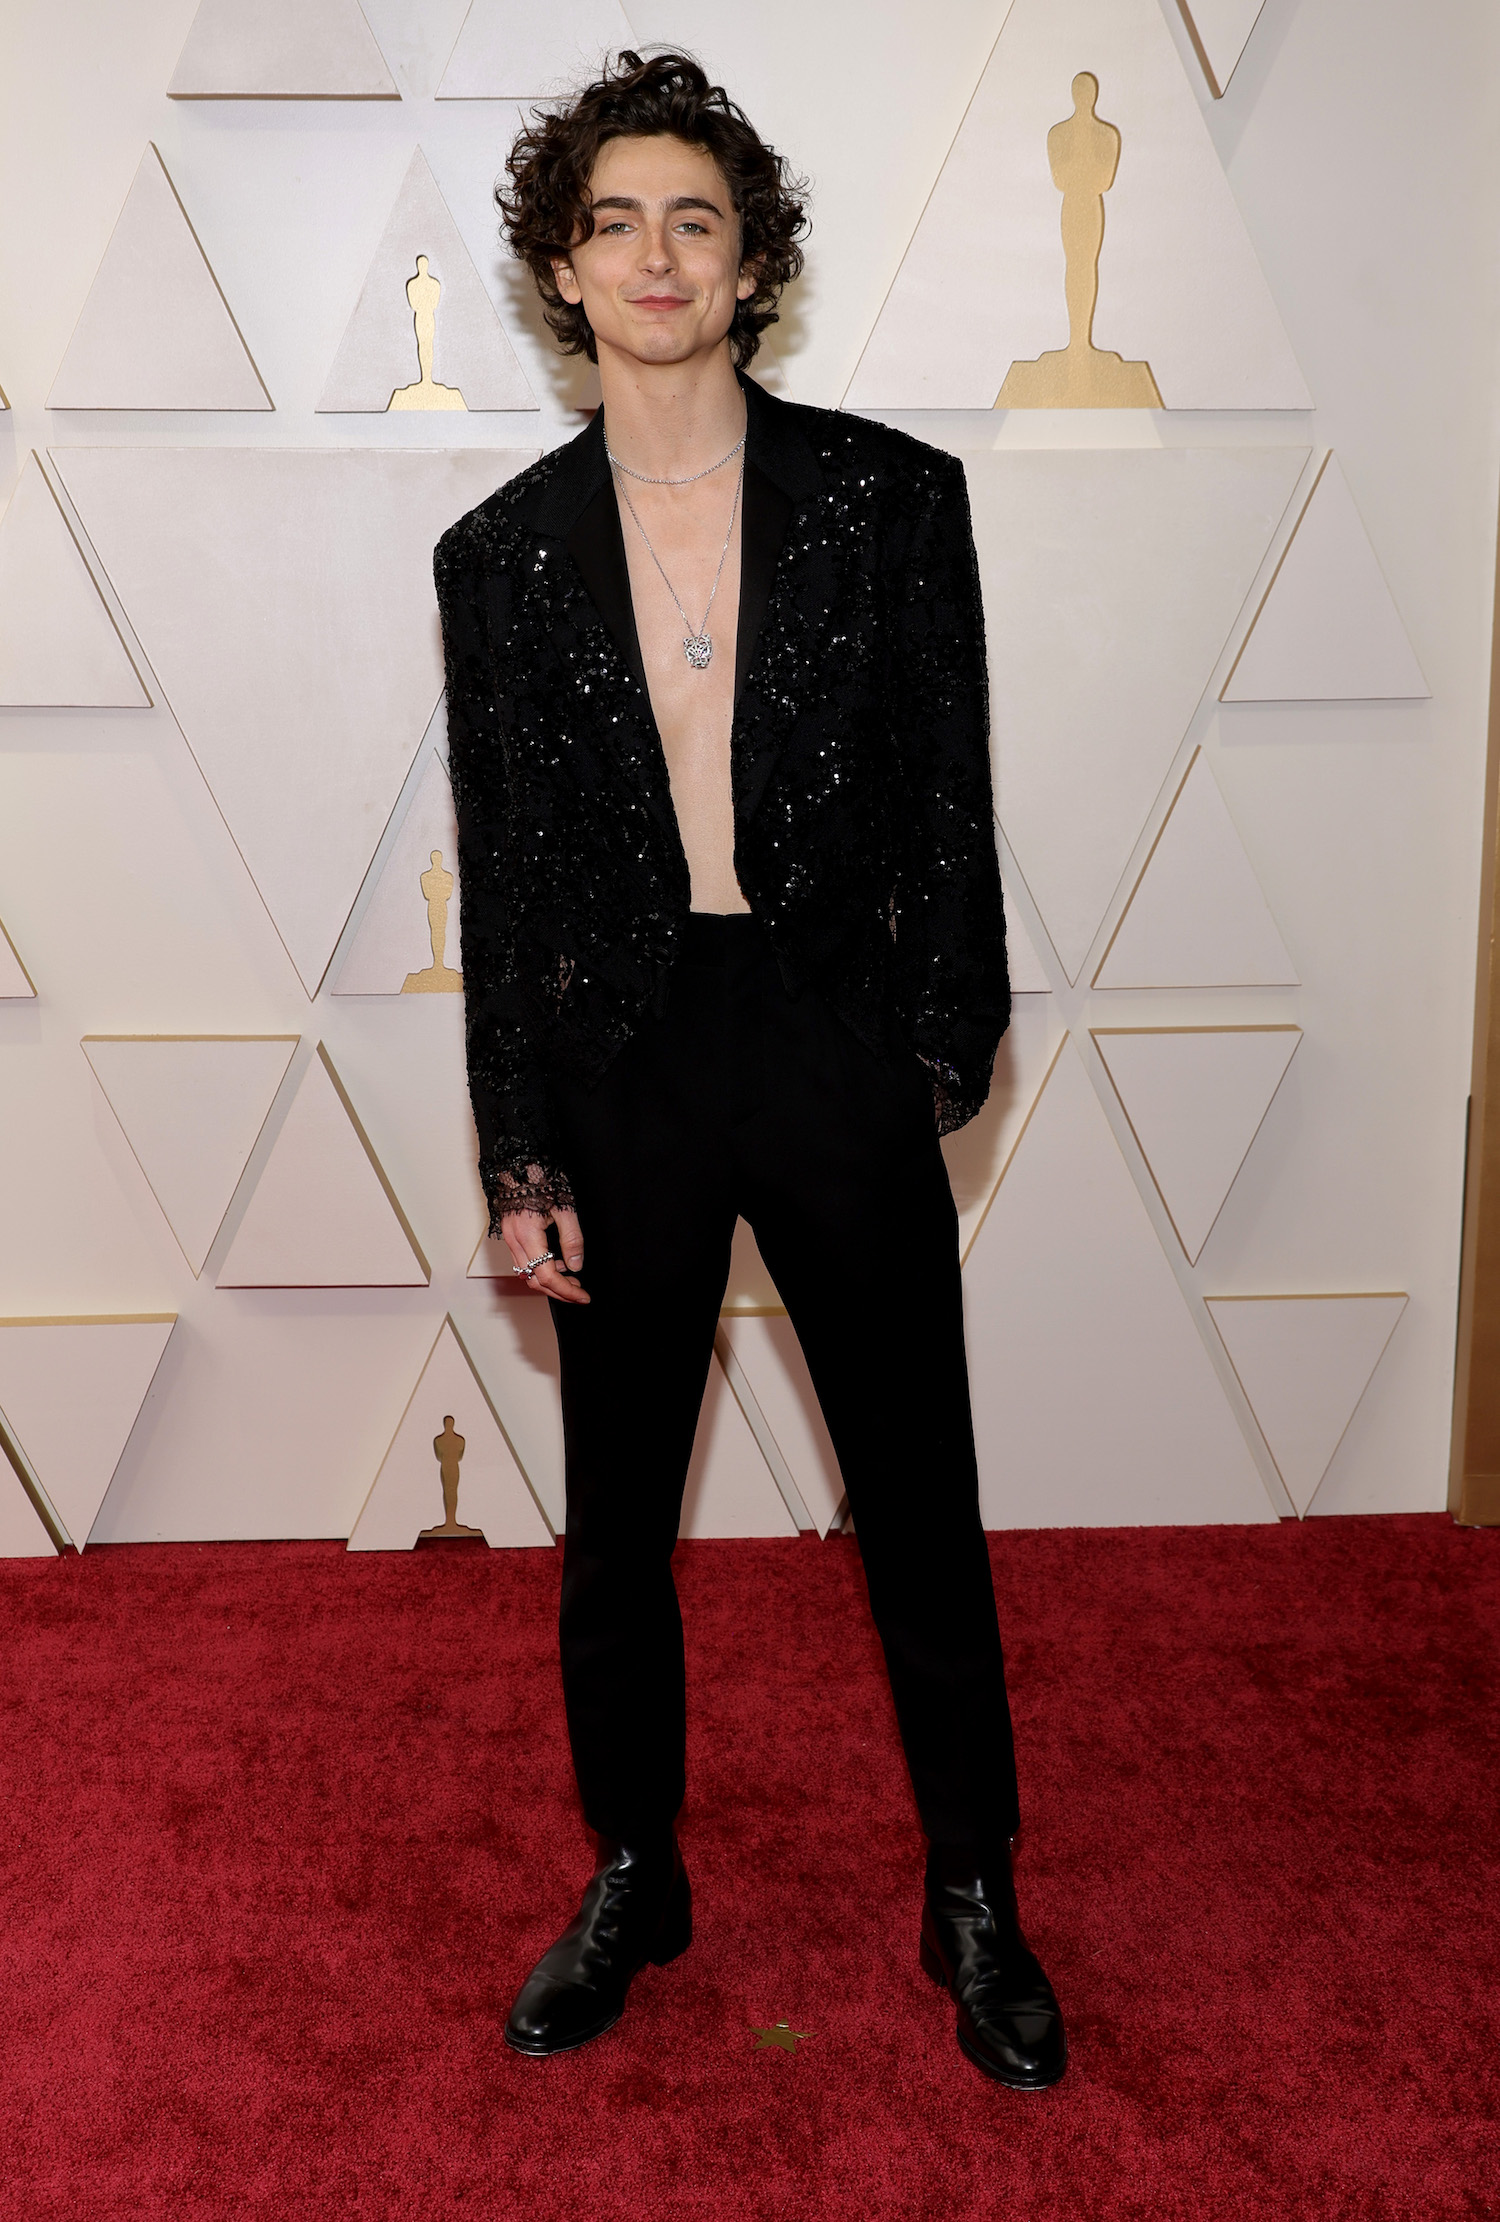 Timothée Chalamet at the Oscars 2022